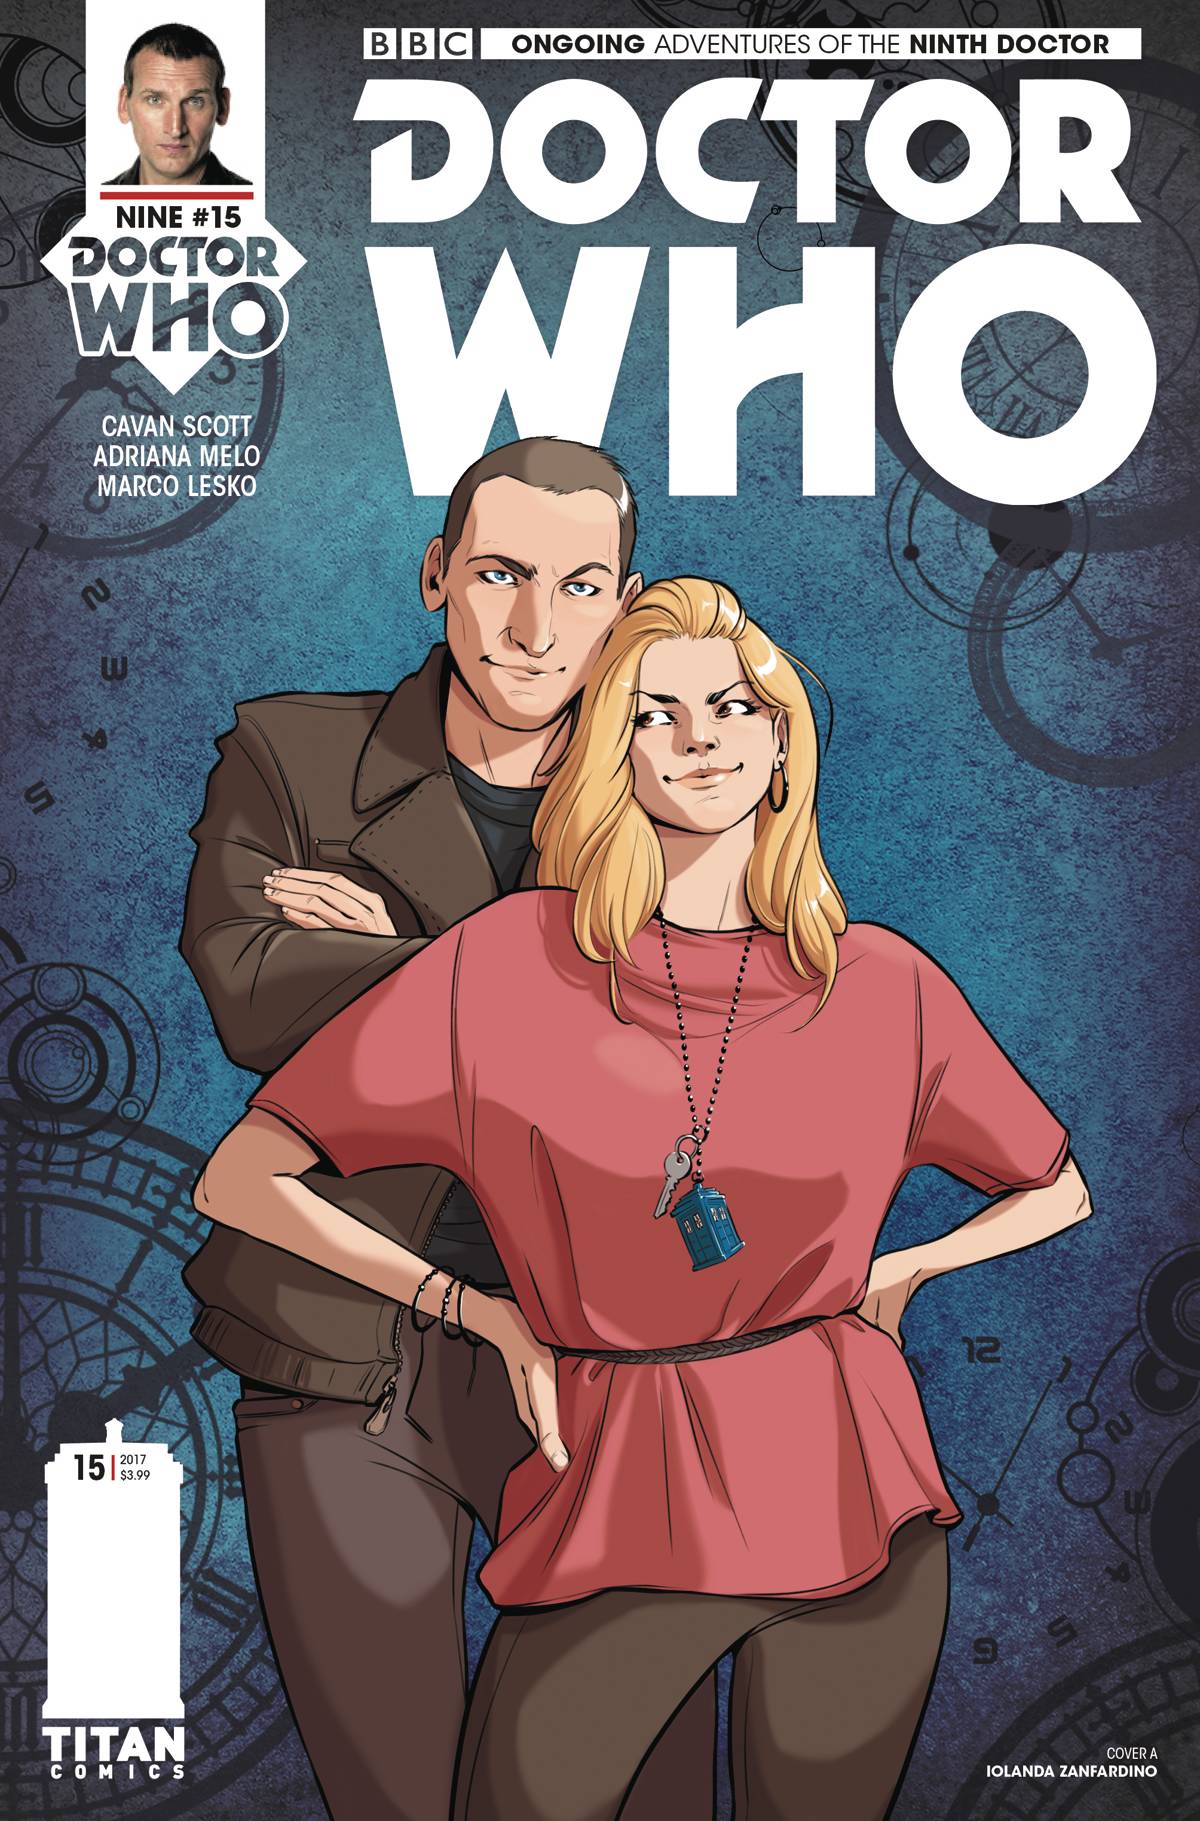 Doctor Who 9th #15 Cover A Zanfardino